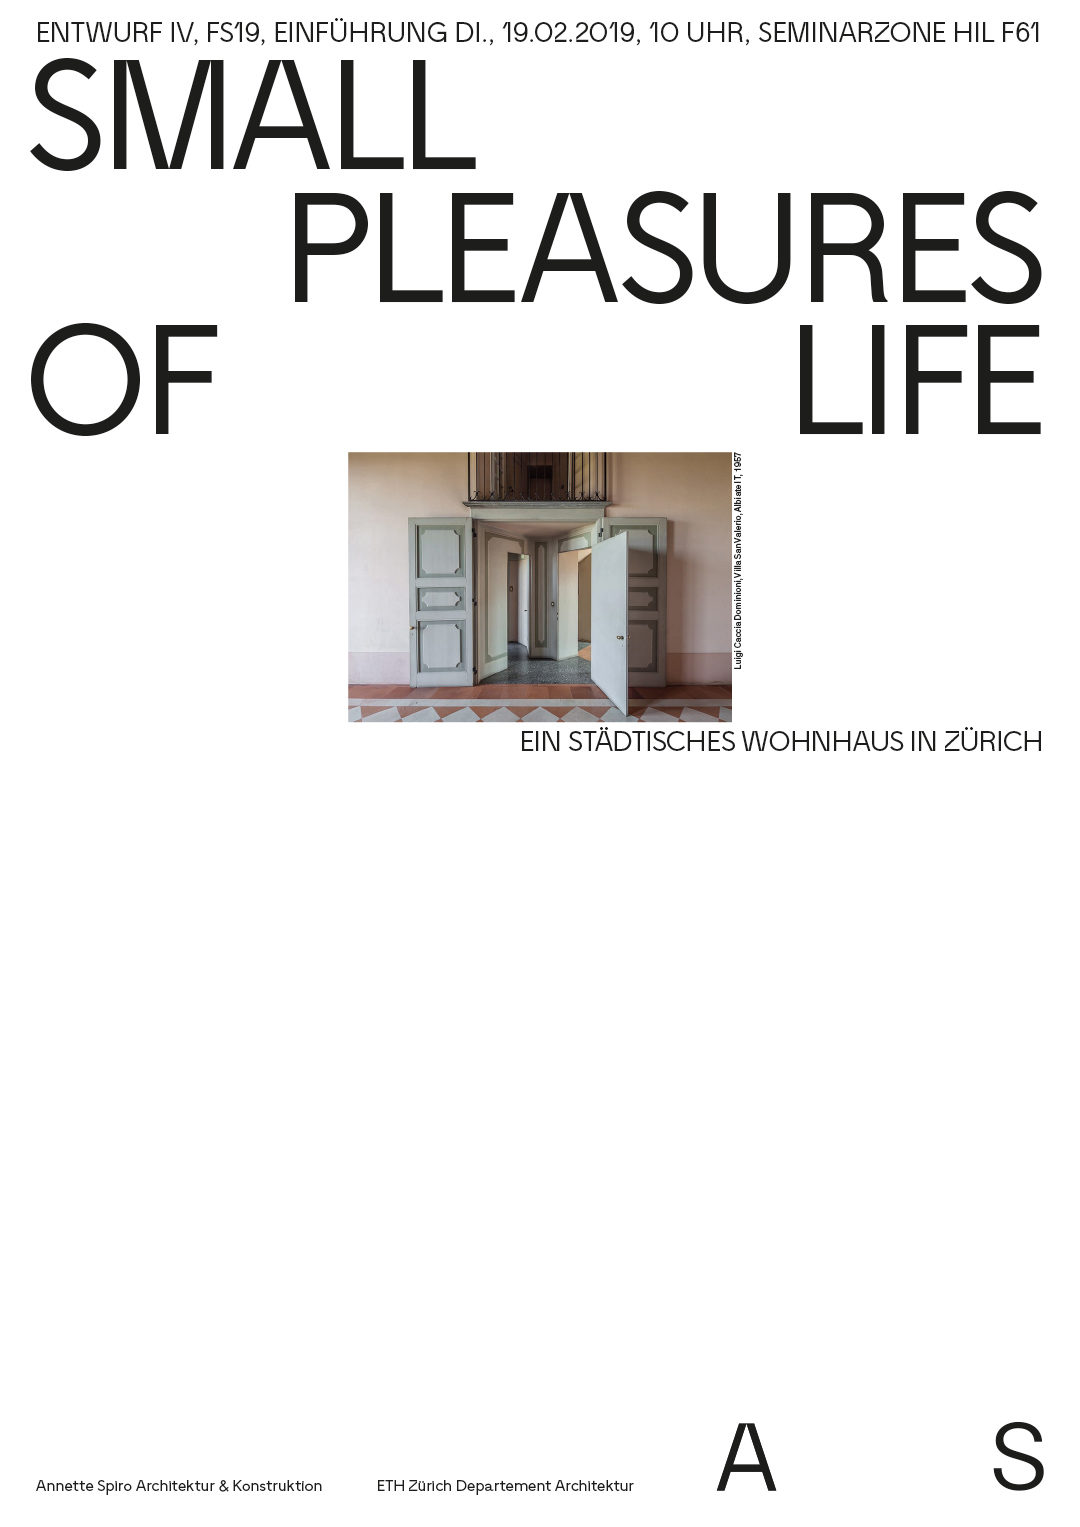 Small Pleasures of Life I. Entwurf IV FS19